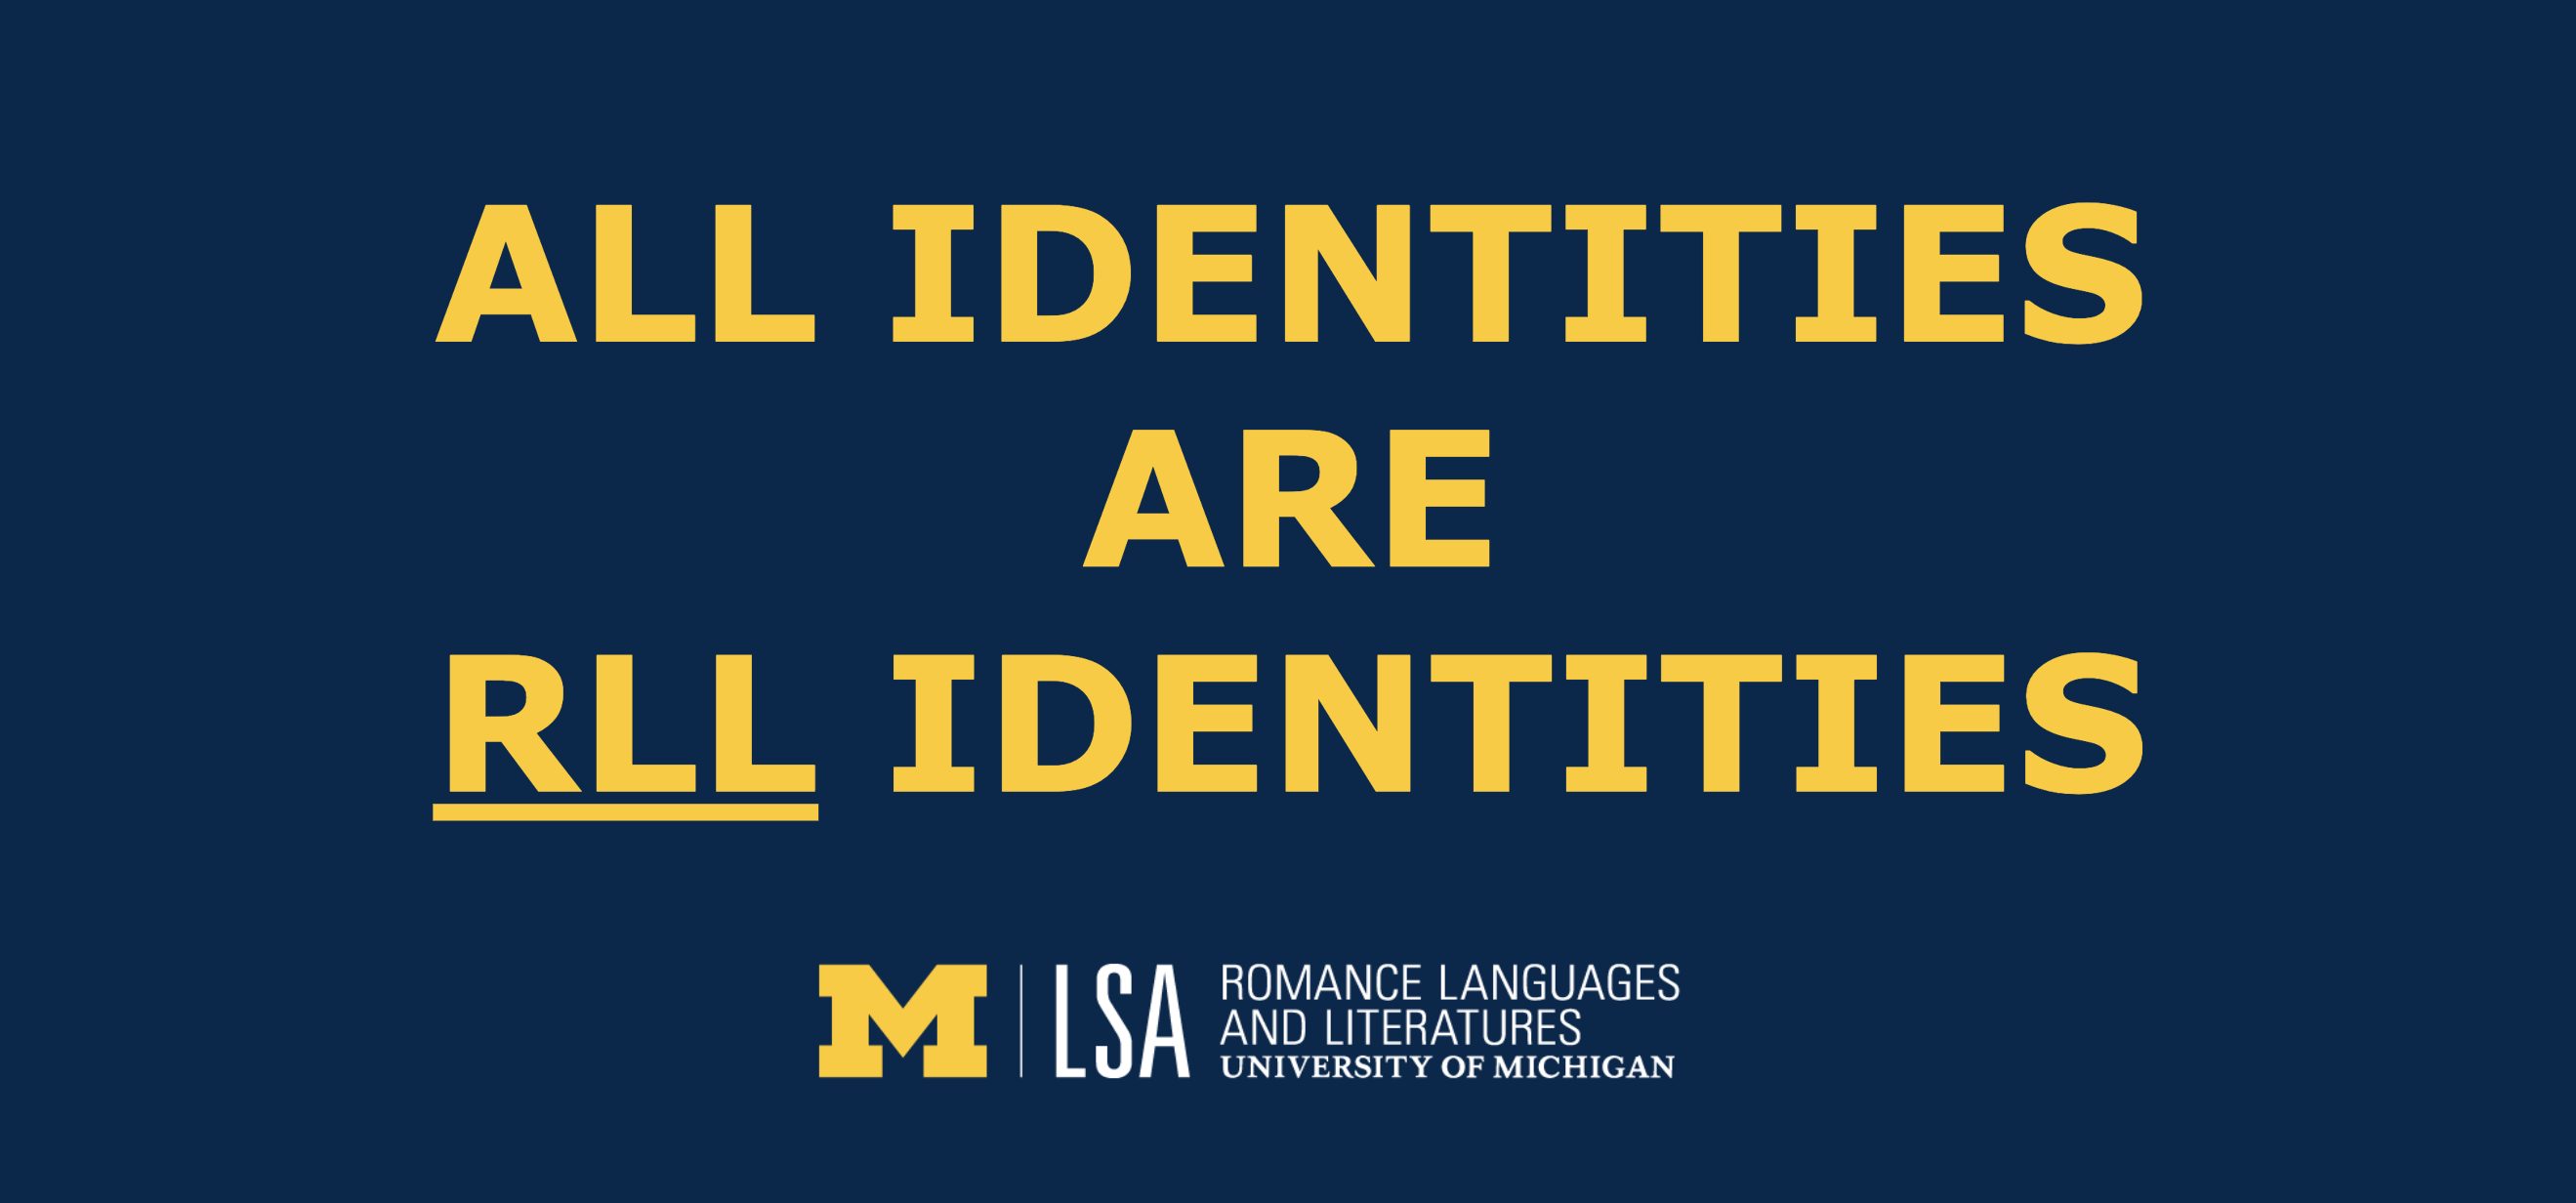 All identities are RLL identities